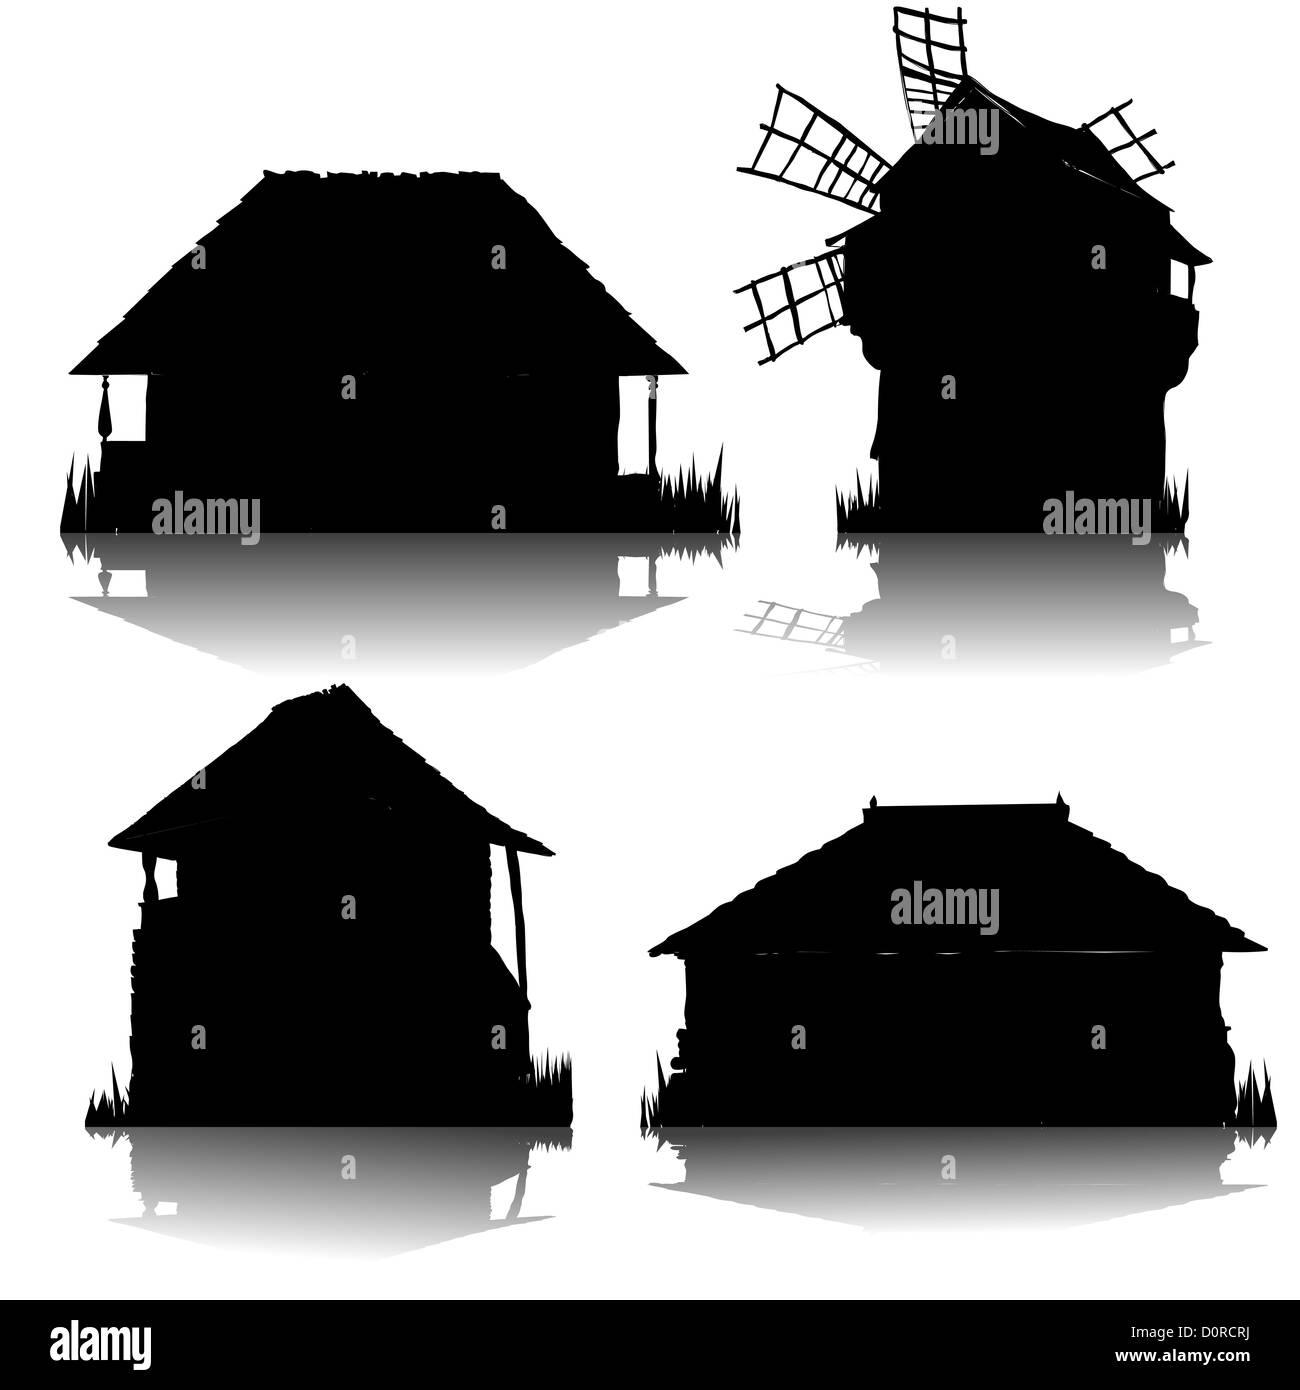 eco houses silhouettes Stock Photo